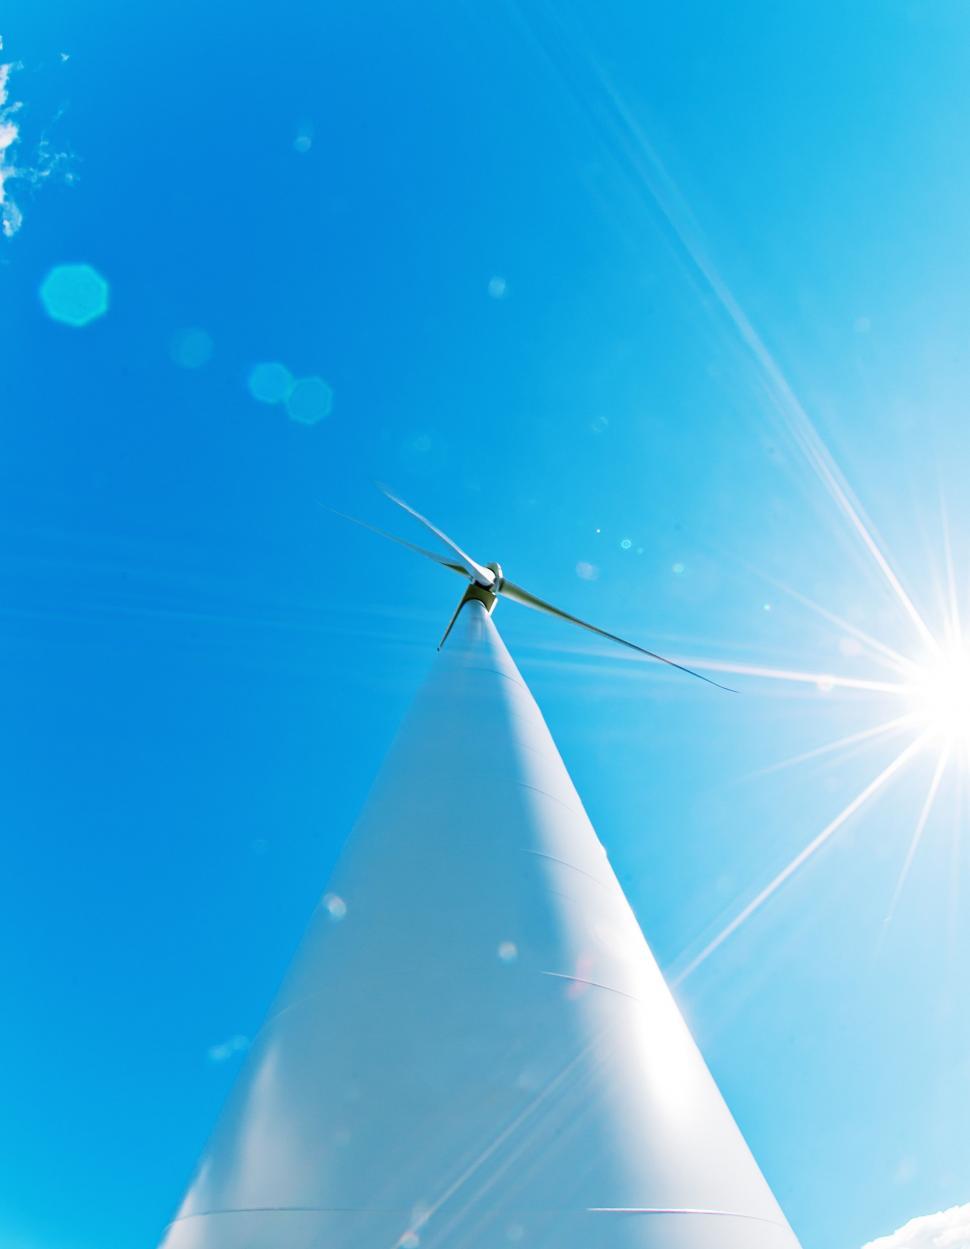 Free Image of Wind turbine and blue sky  